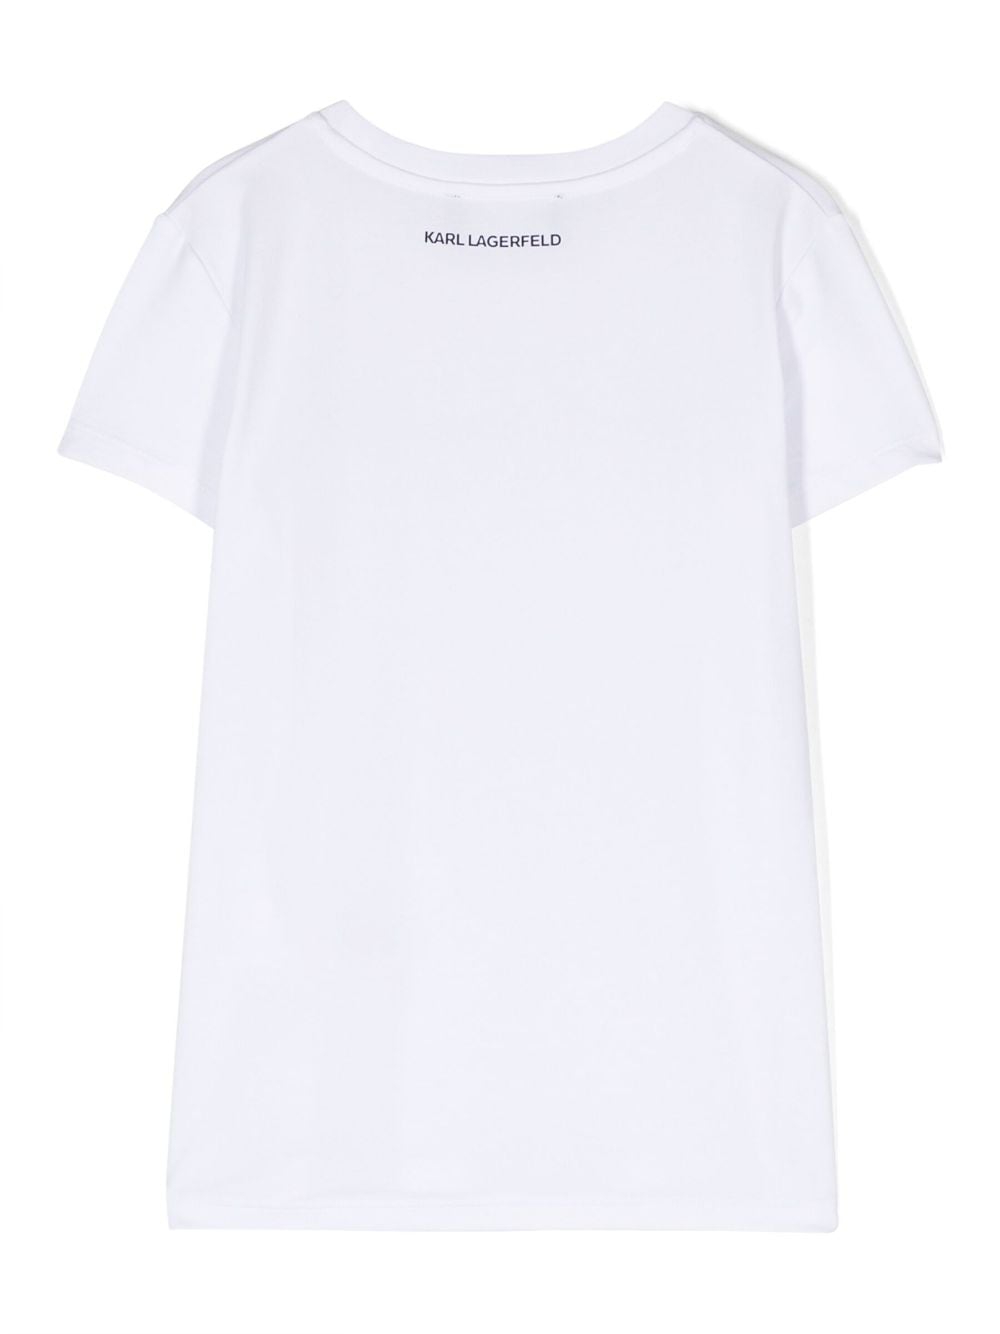 White cotton jersey girl KARL LAGERFELD t-shirt